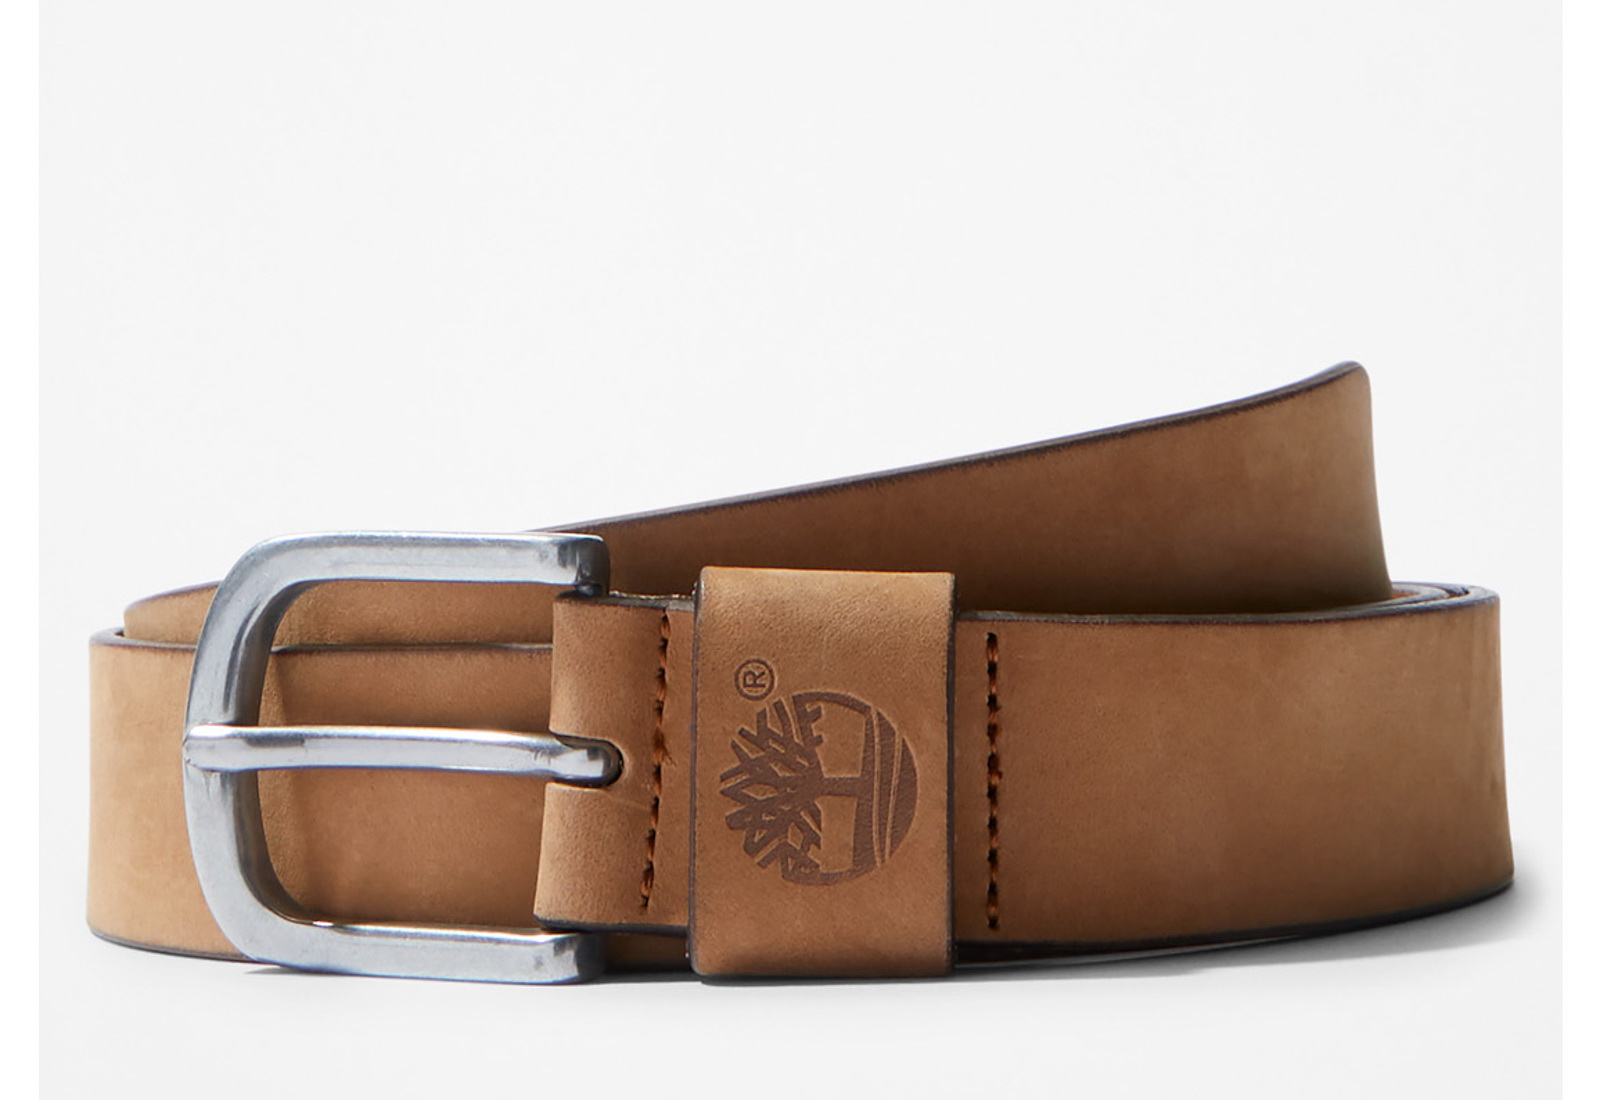 Timberland Haine Nubuck Leather Belt